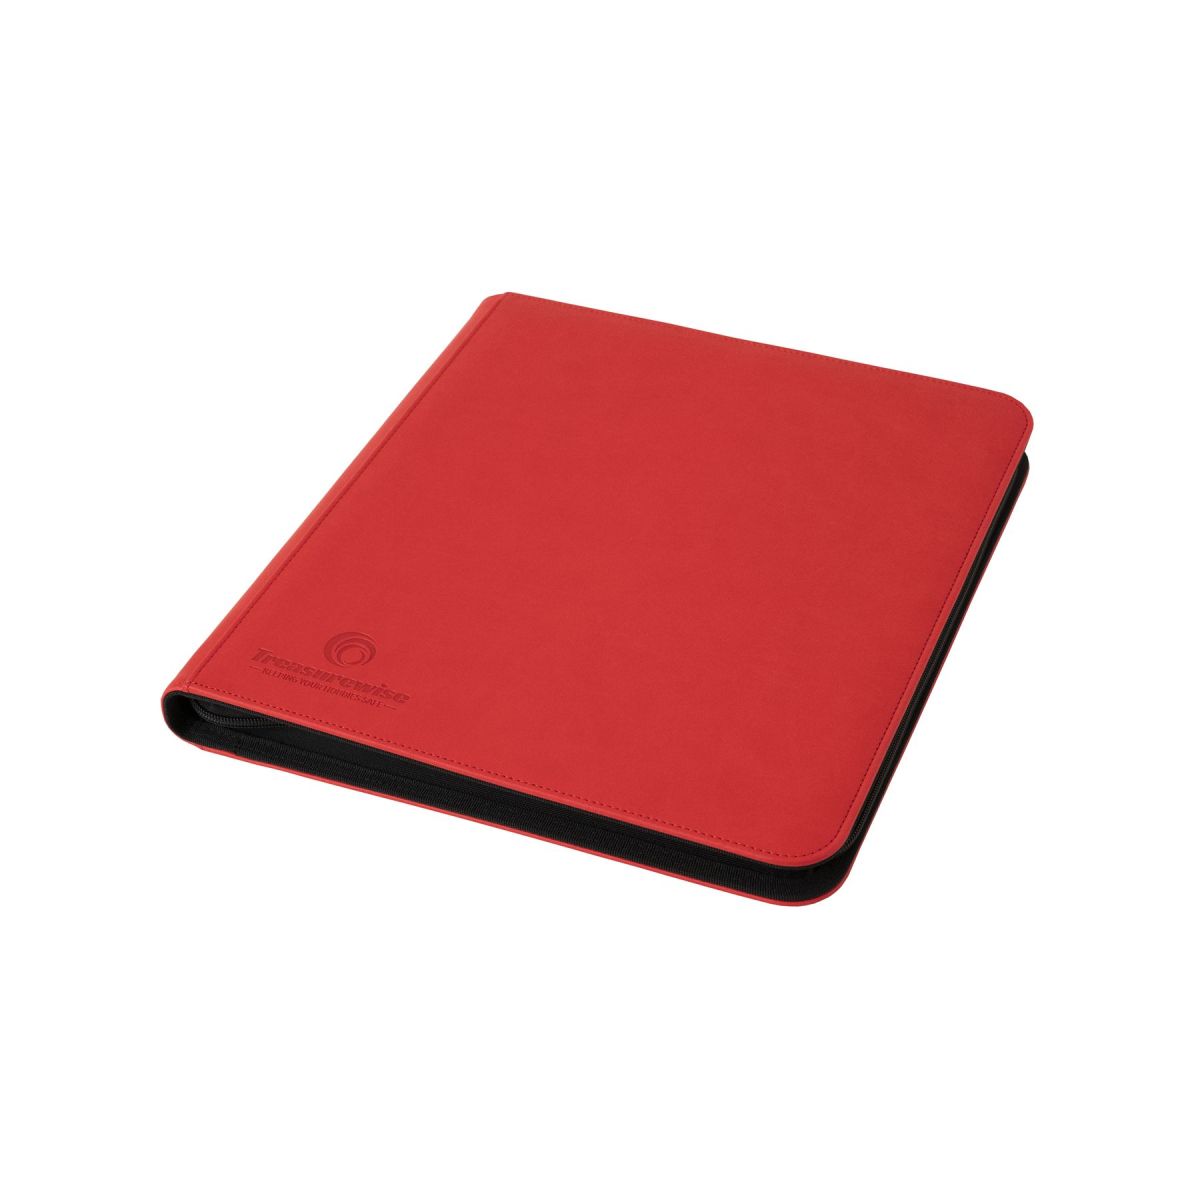 Treasurewise - WiseGuard XL Zip Binder - Rouge/Red (480)